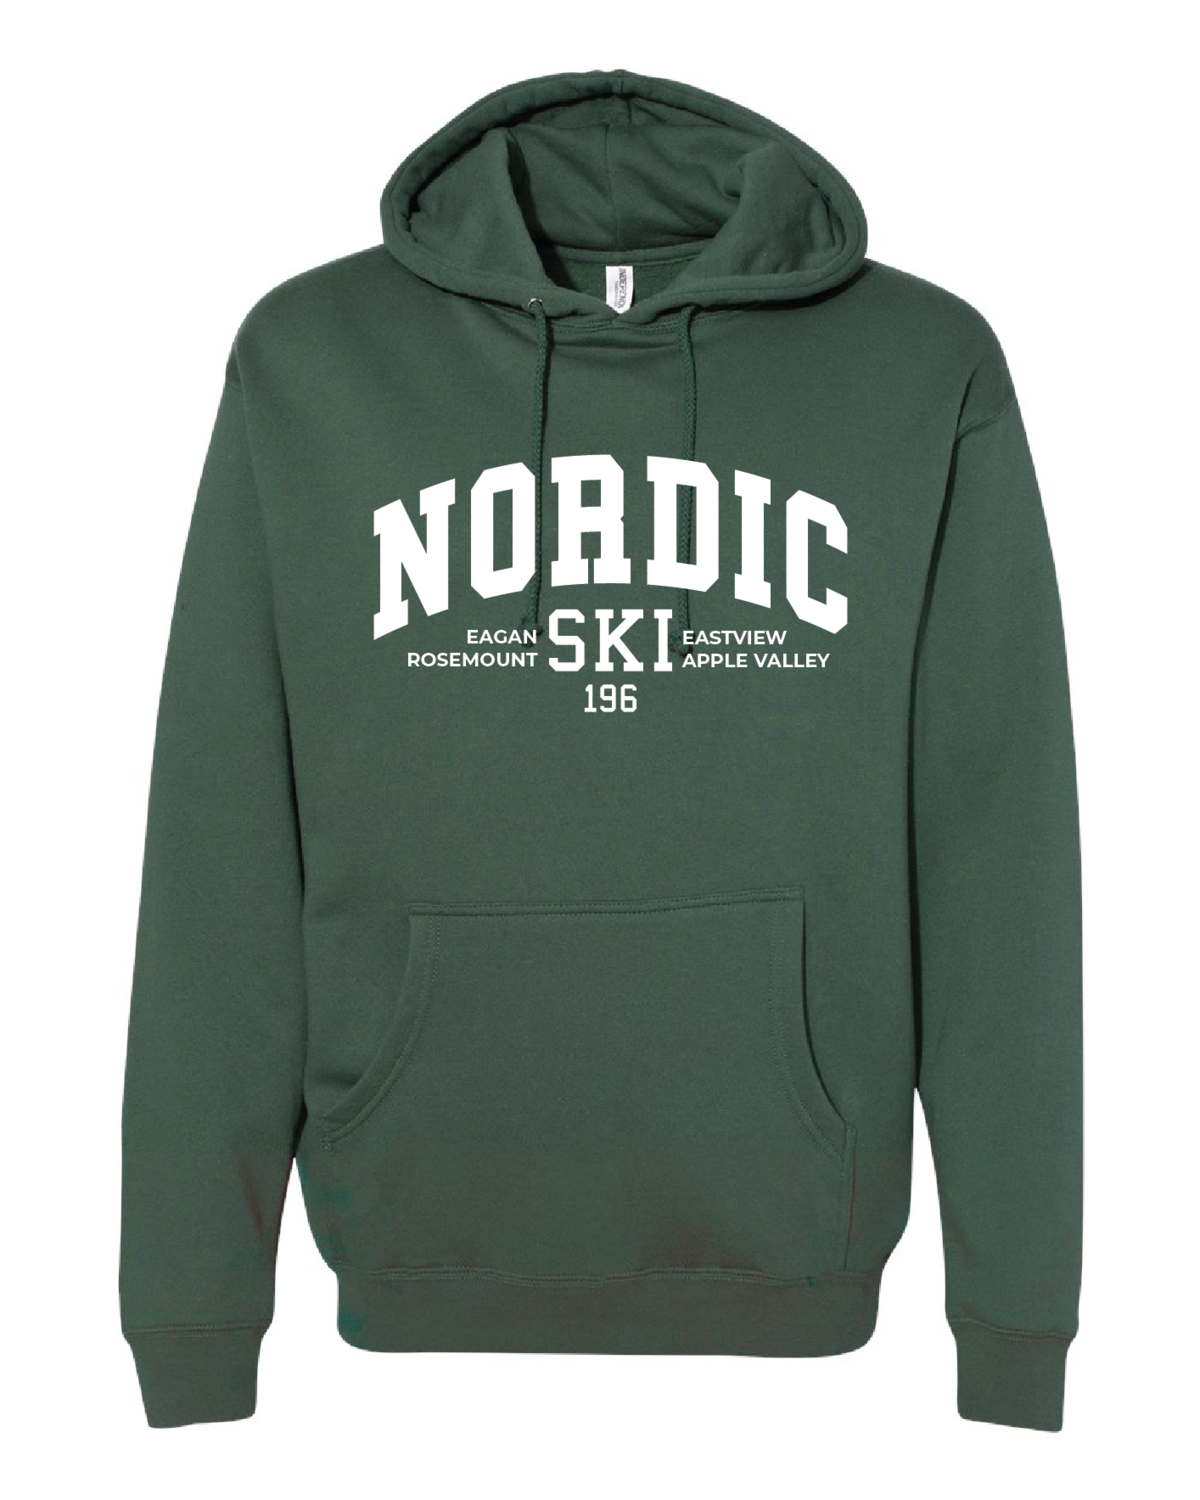 ISD 196 Nordic Ski Team HEAVYWEIGHT Hoodie - Adult